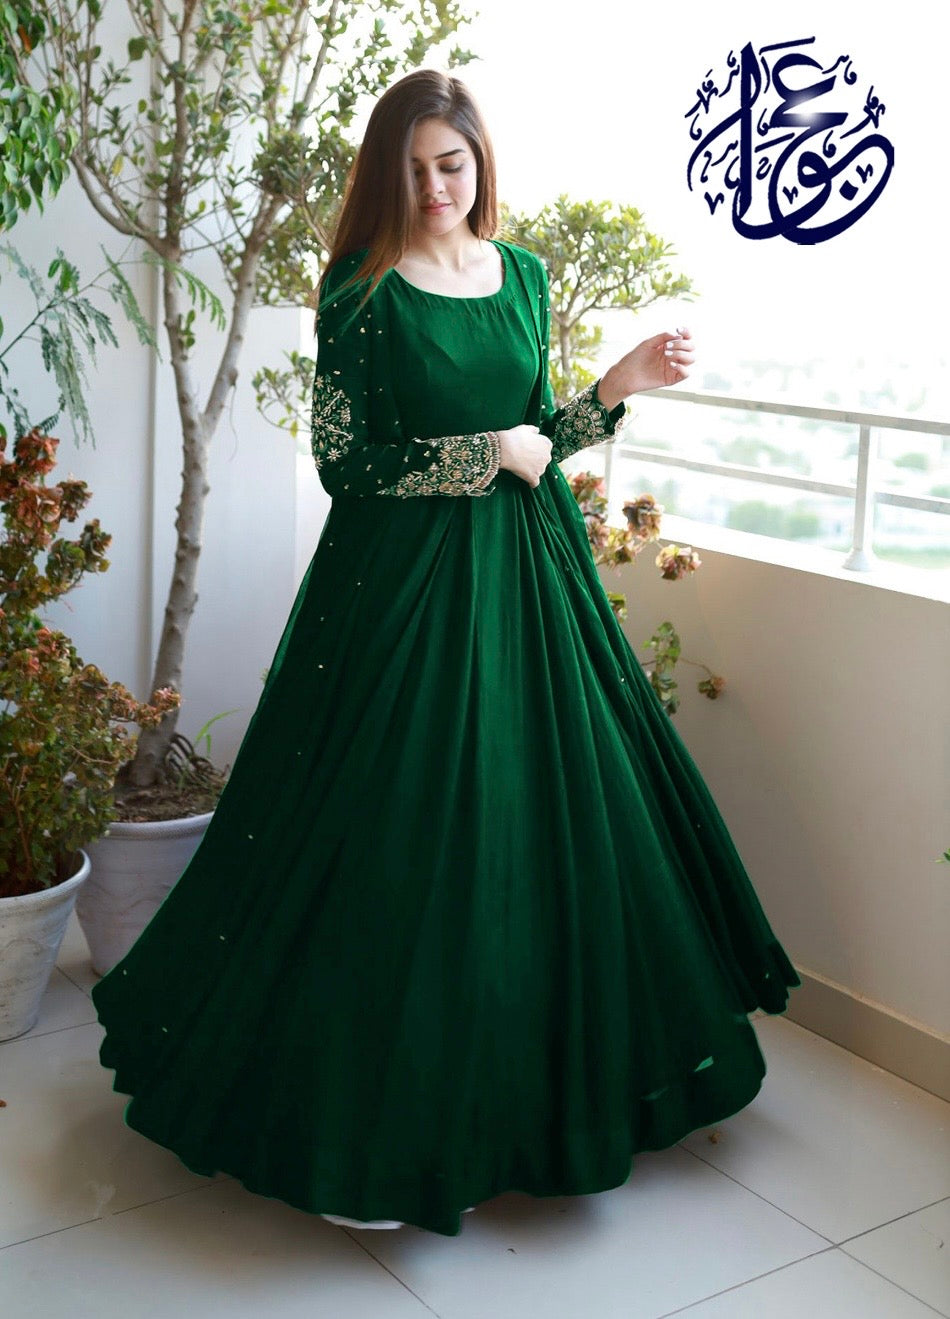 Stunning Embroidered Gown Set: Effortless Elegance!" ✨👗